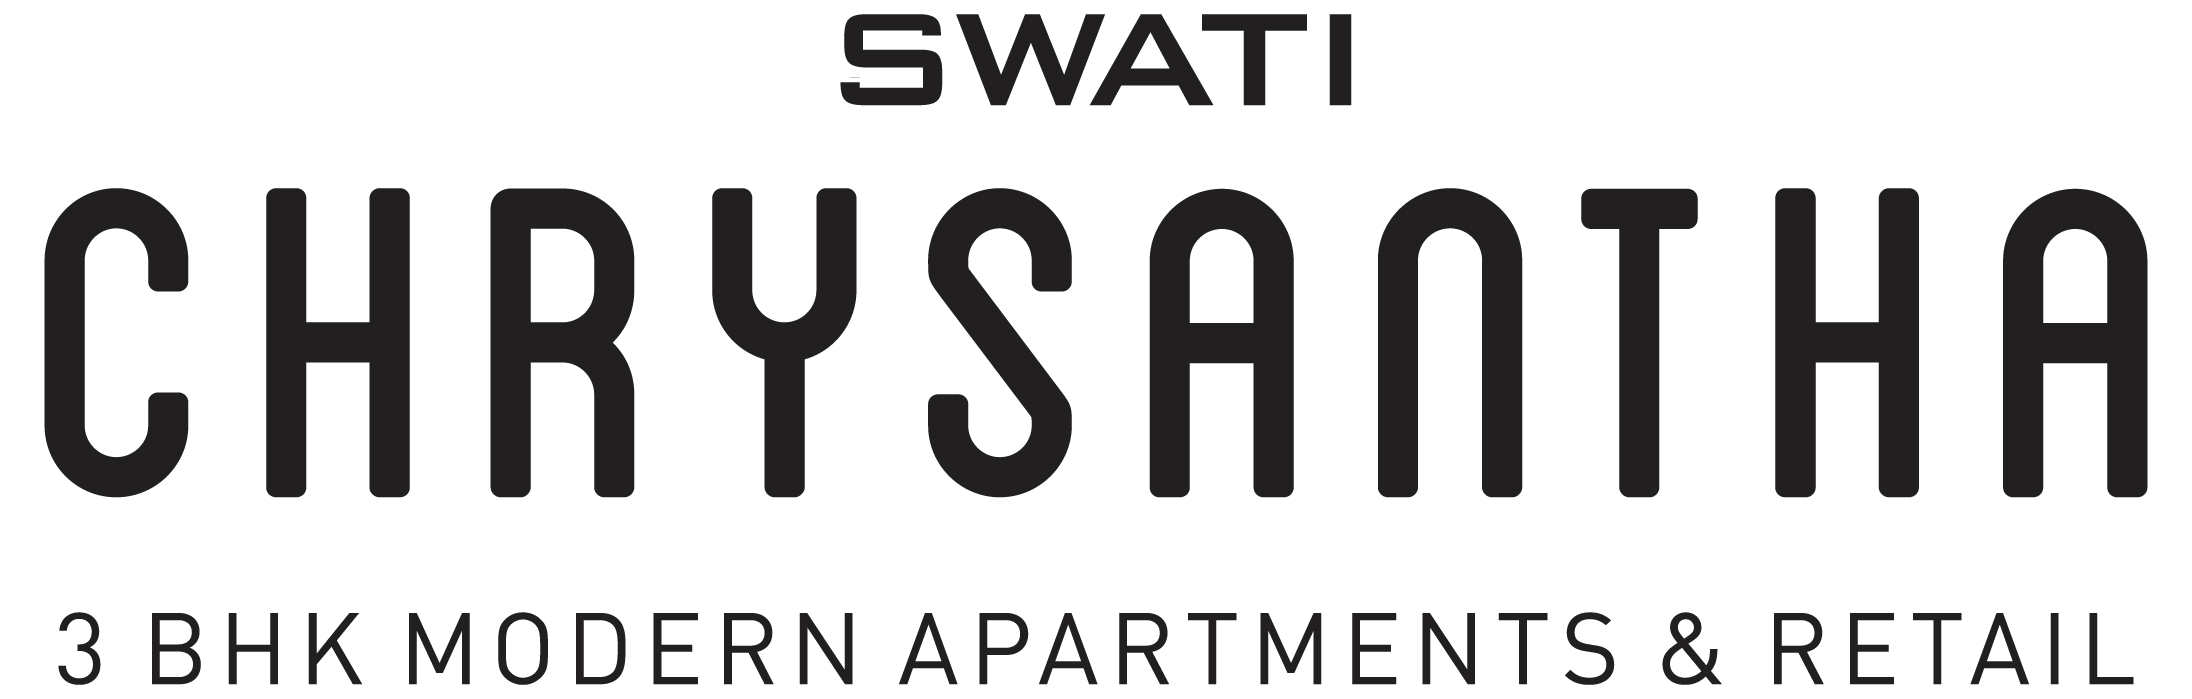 3 BHK Residential Apartment of Swati Chrysantha at Shela